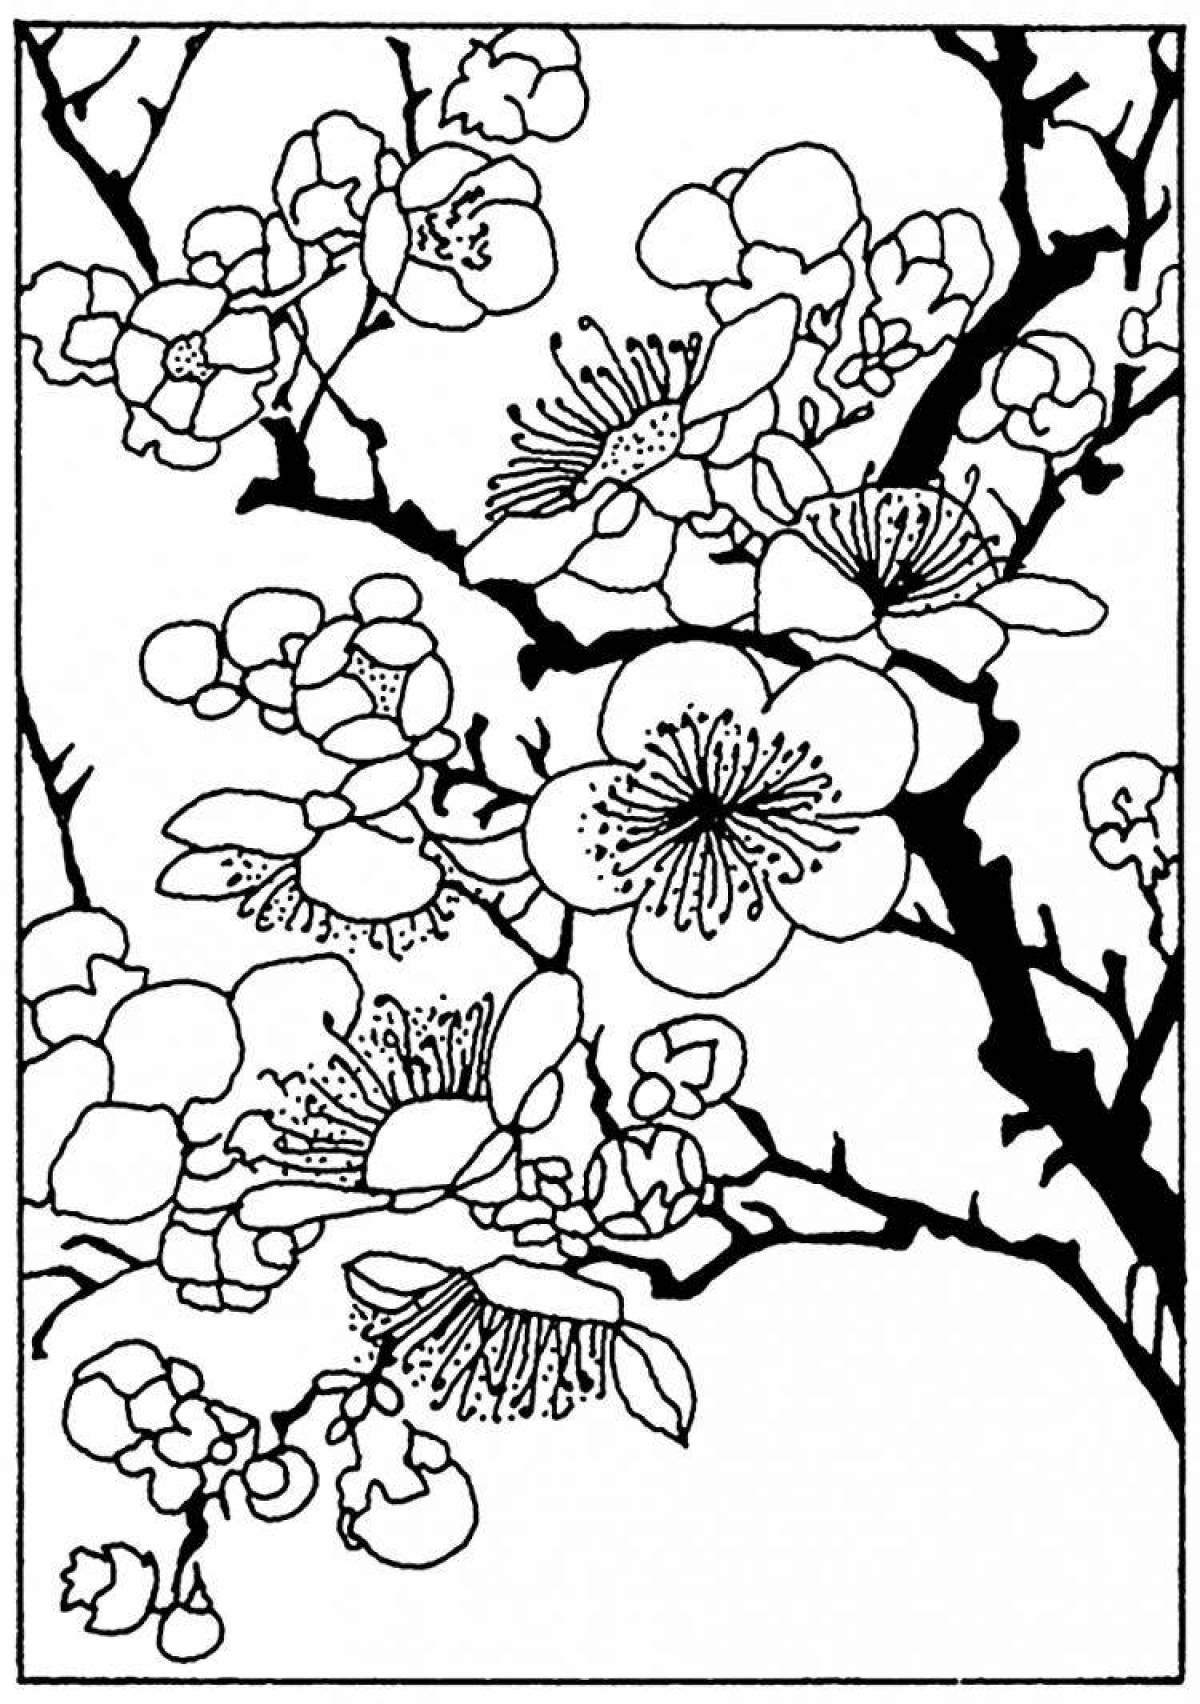 Coloring fairy sakura branch for children